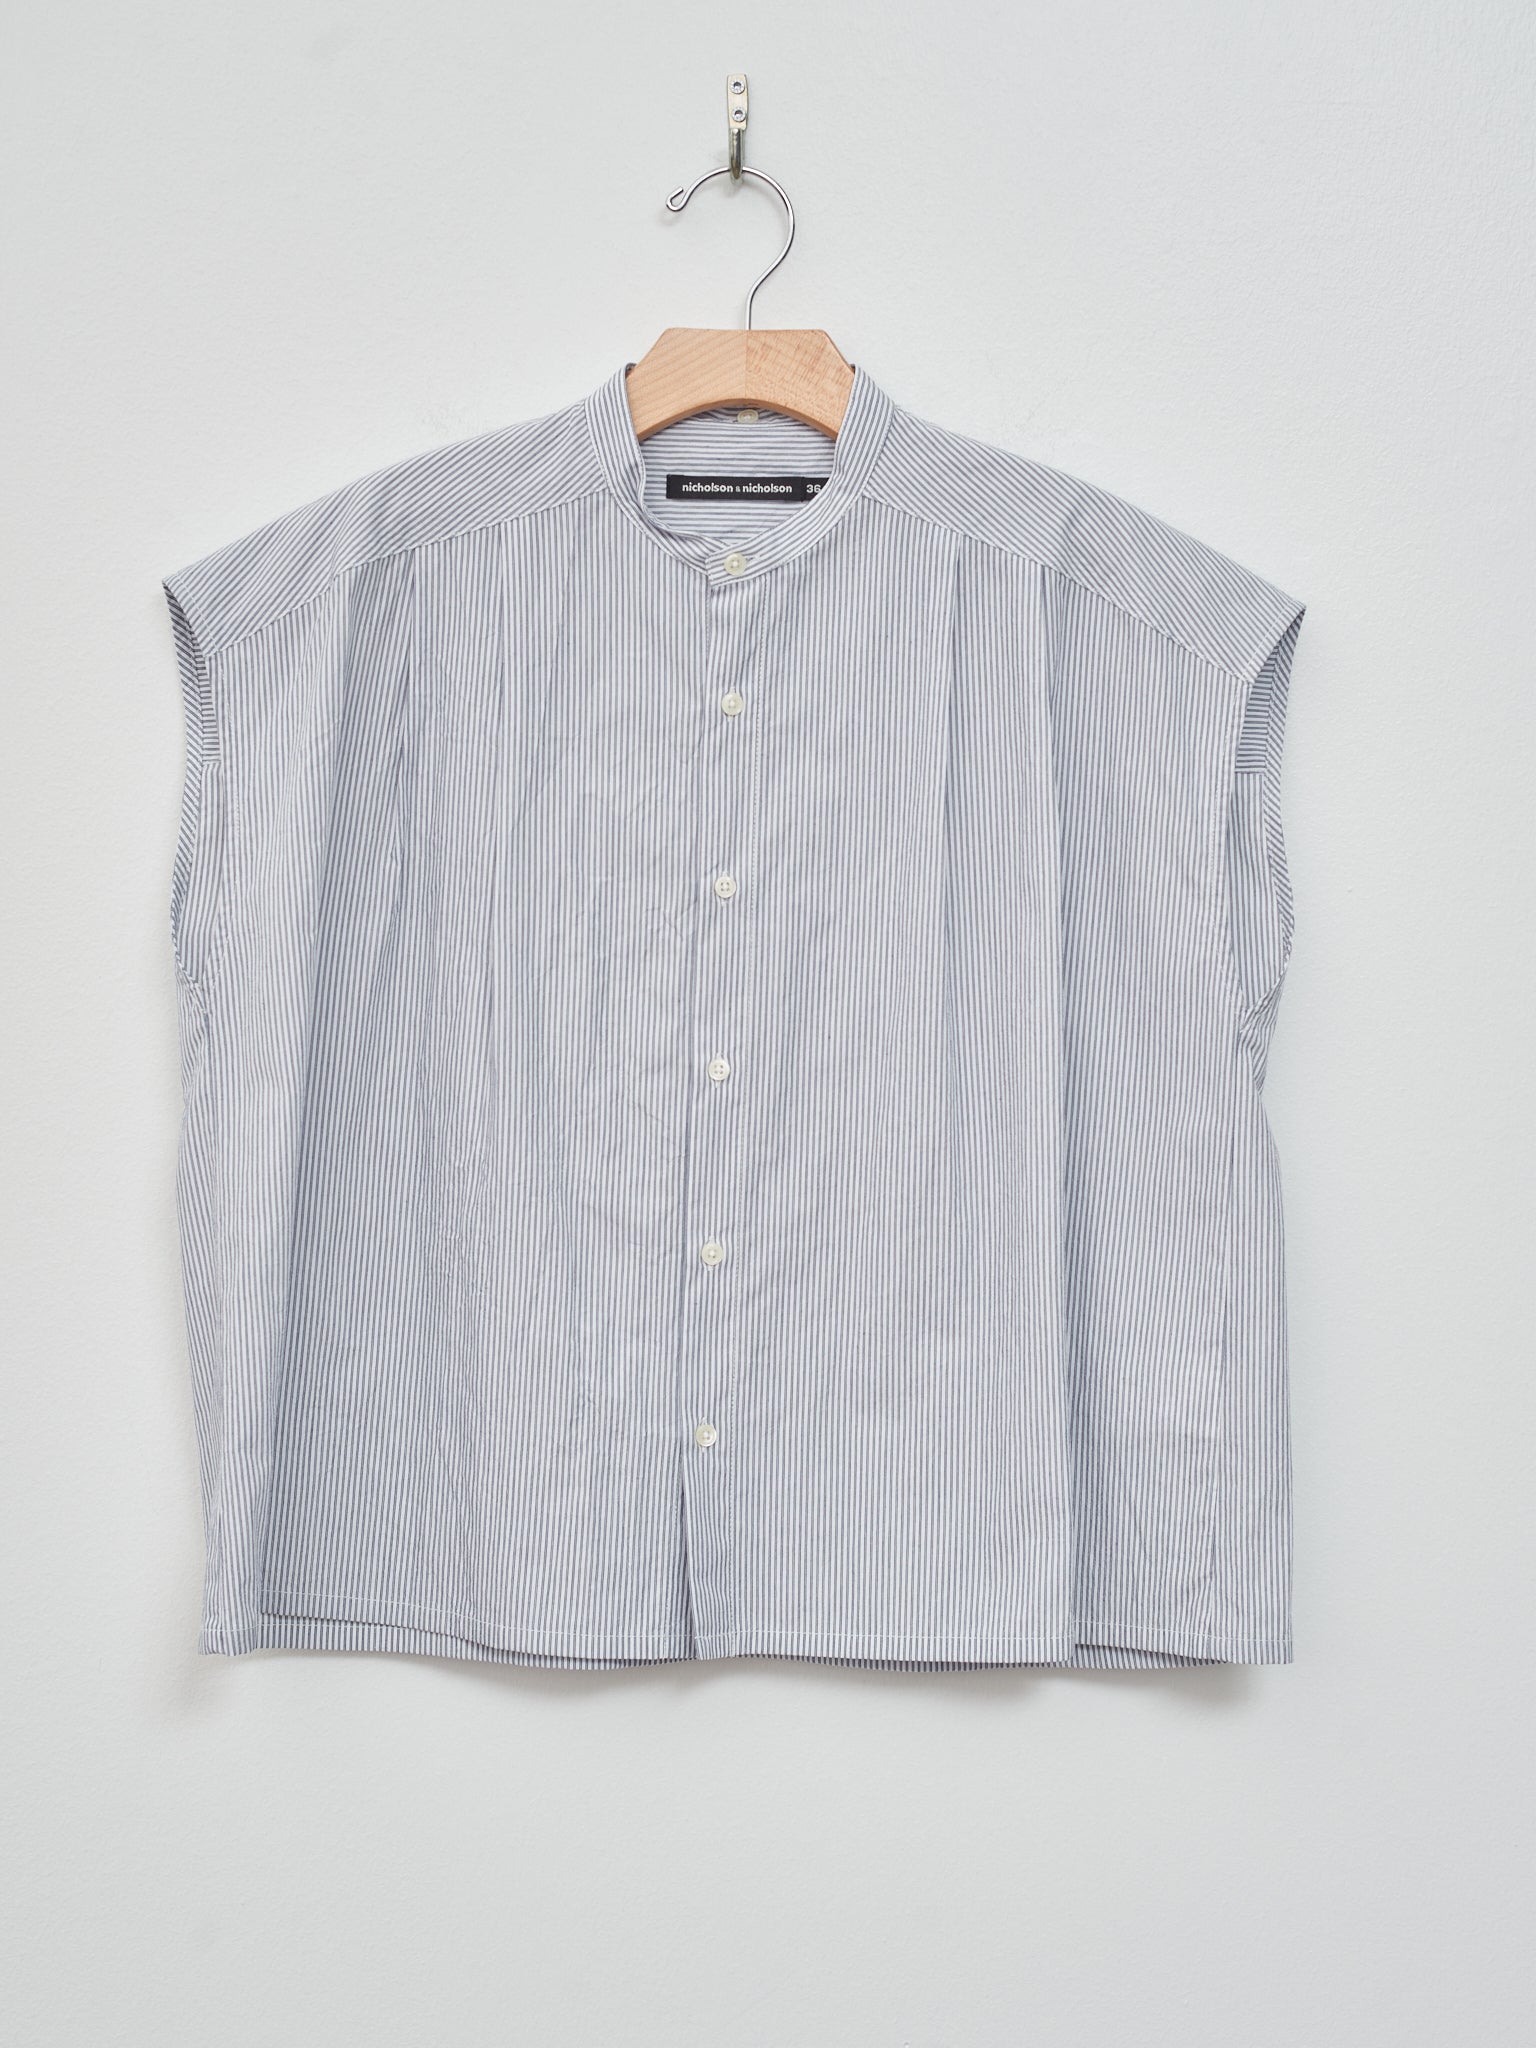 Namu Shop - Nicholson & Nicholson Smile Shirt - Blue Stripe